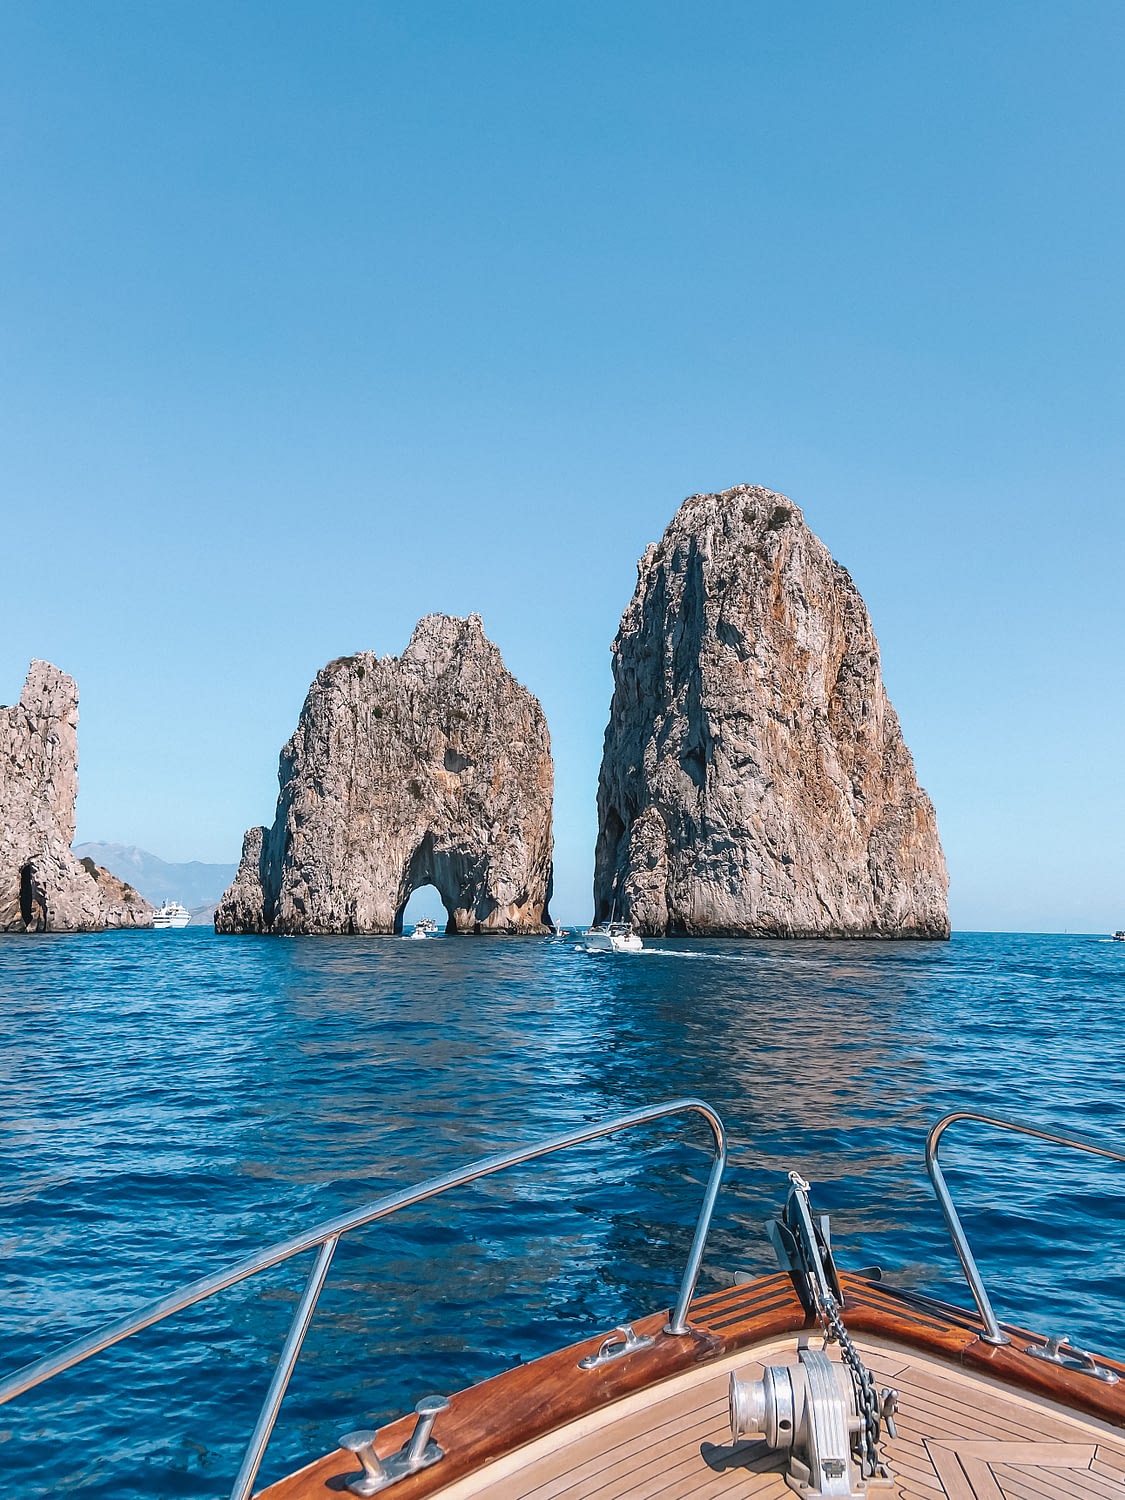 capri rocks amalfische kust